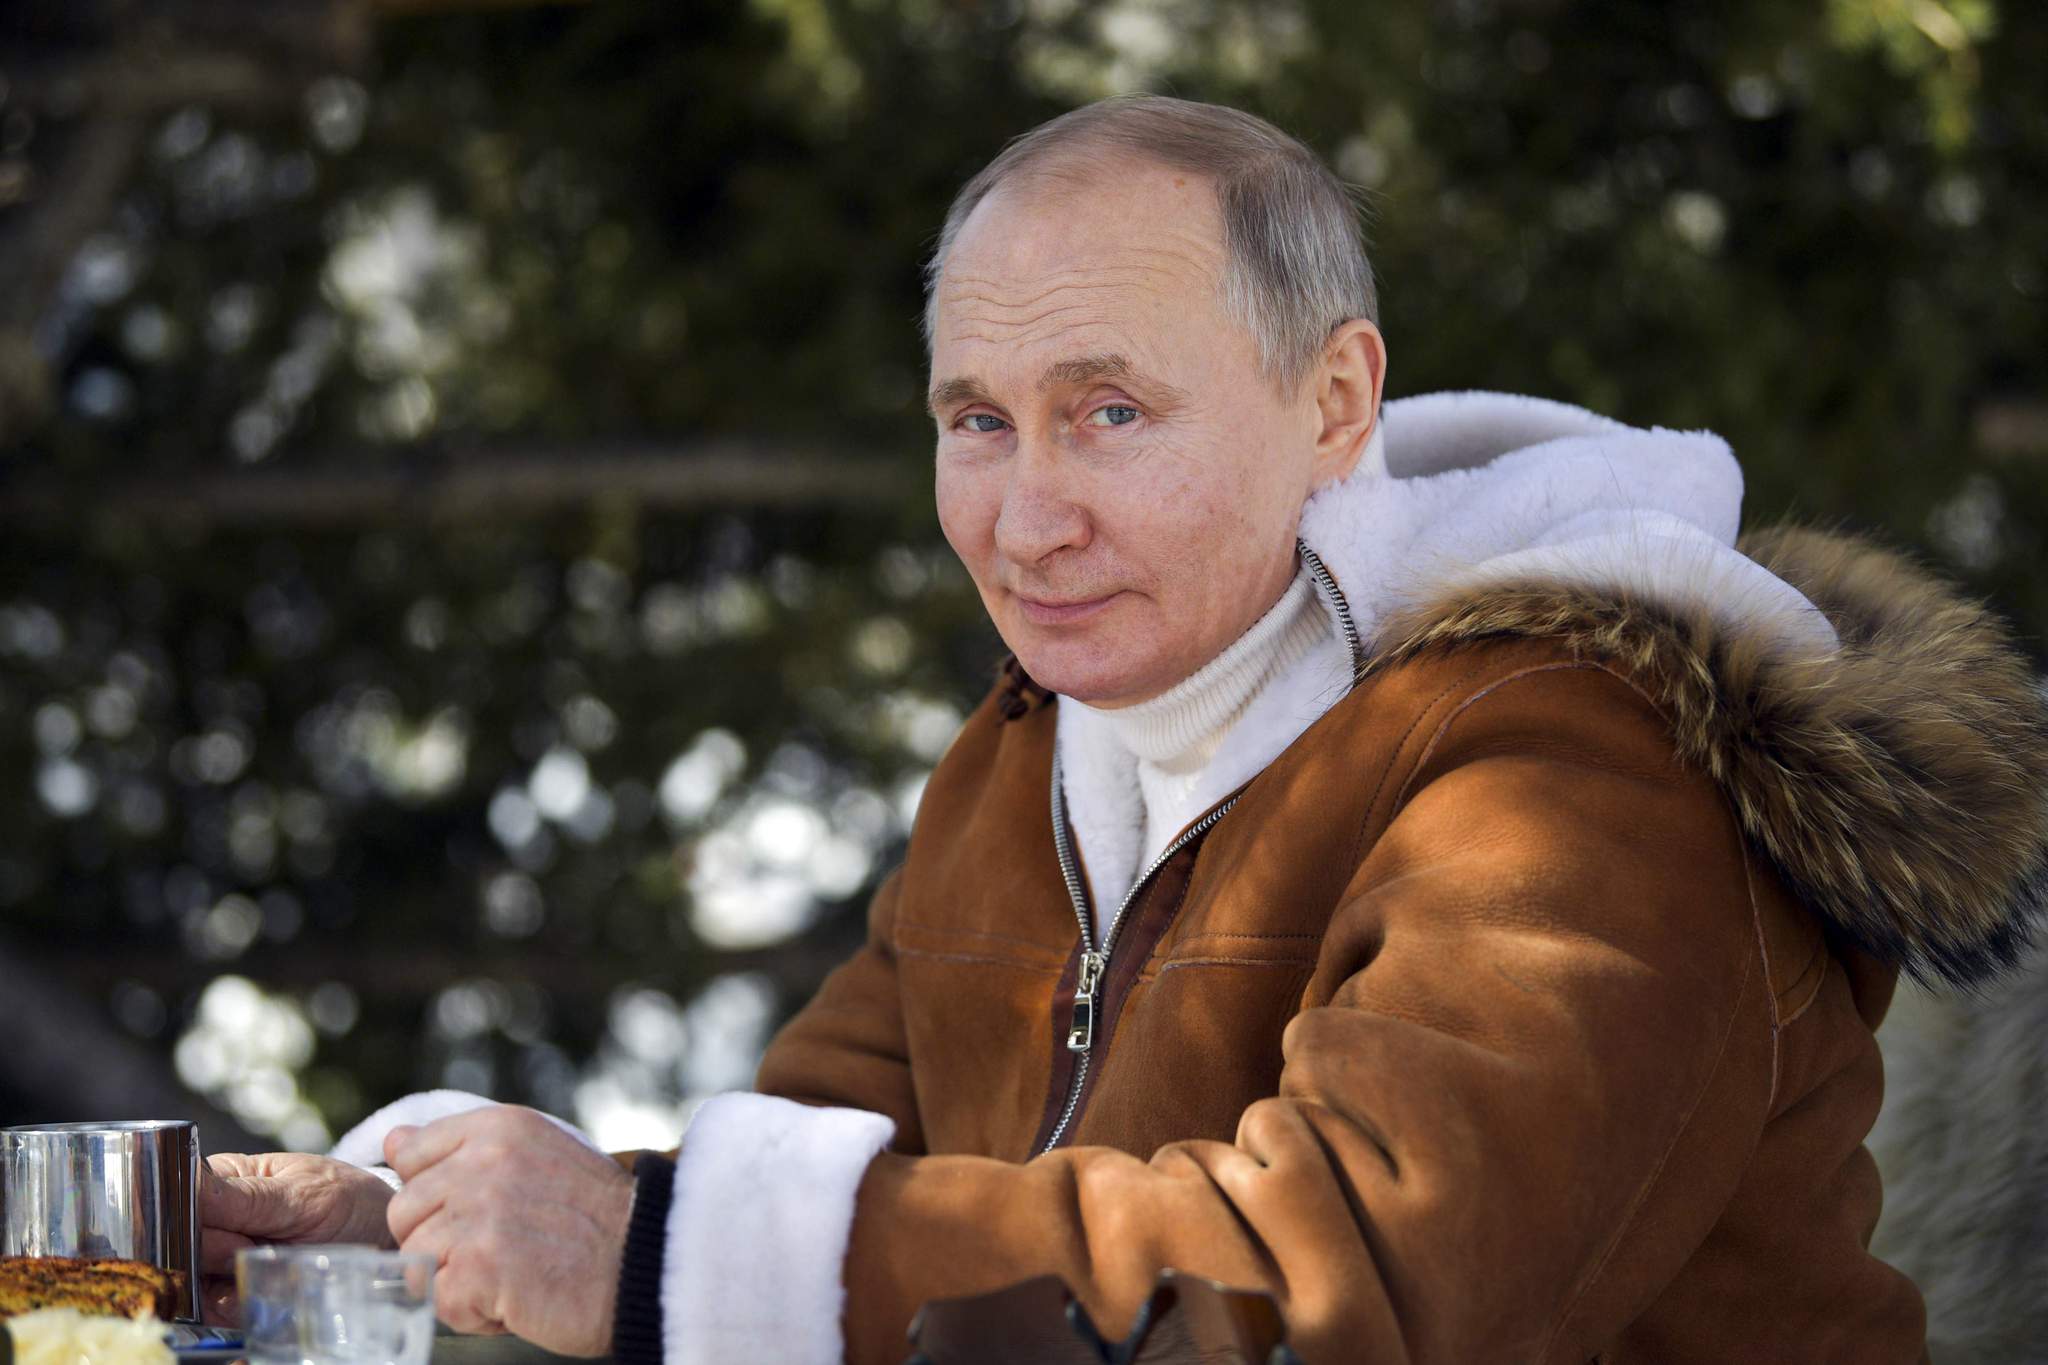 Russia criticizes US refusal to hold quick Putin-Biden call